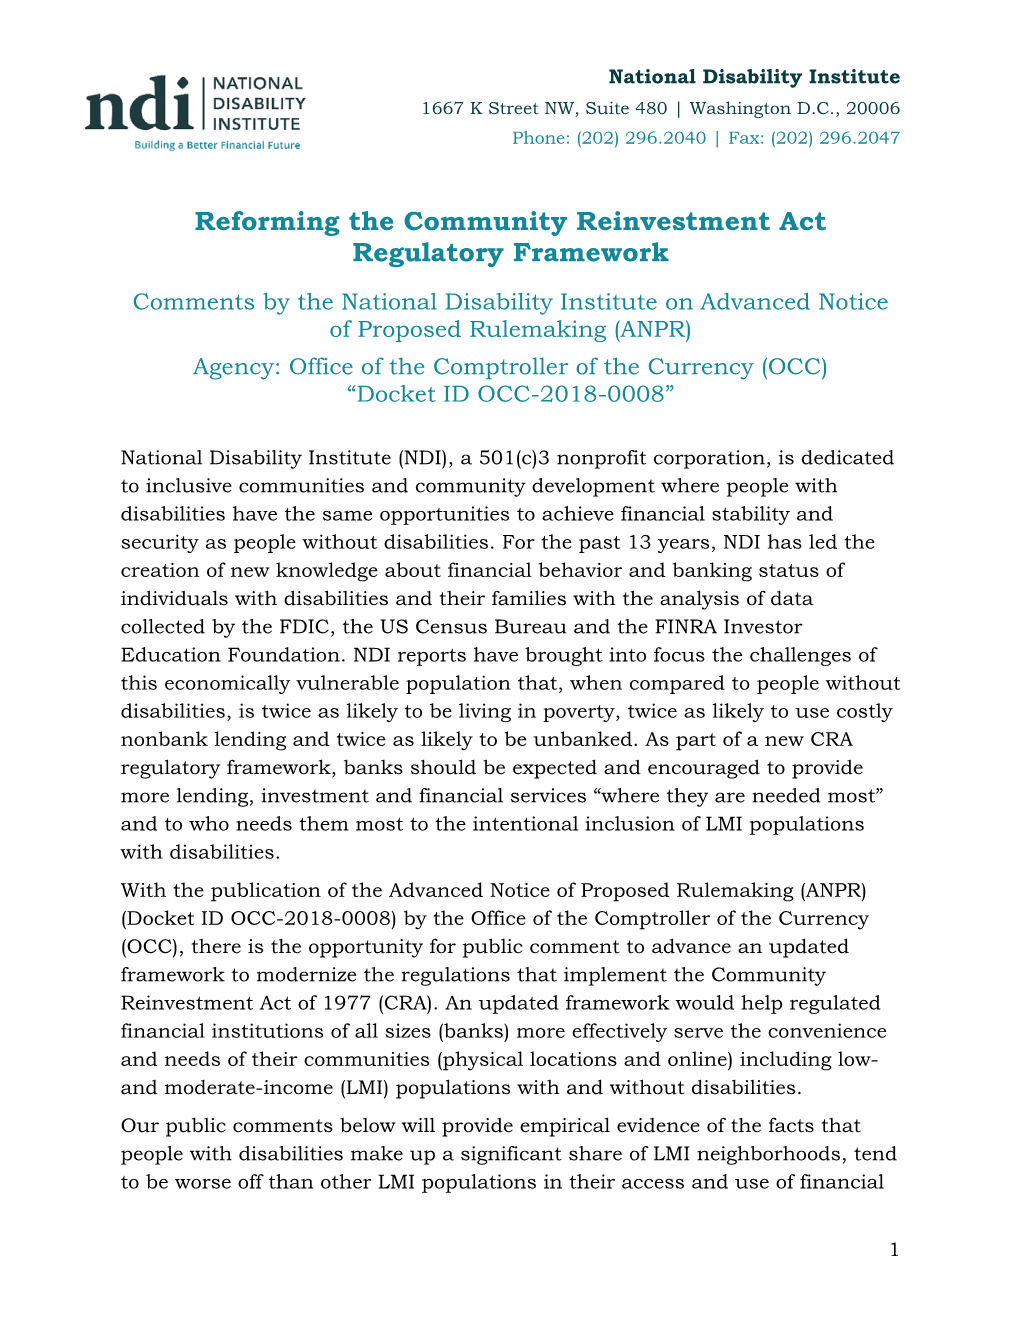 Reforming the Community Reinvestment Act Regulatory